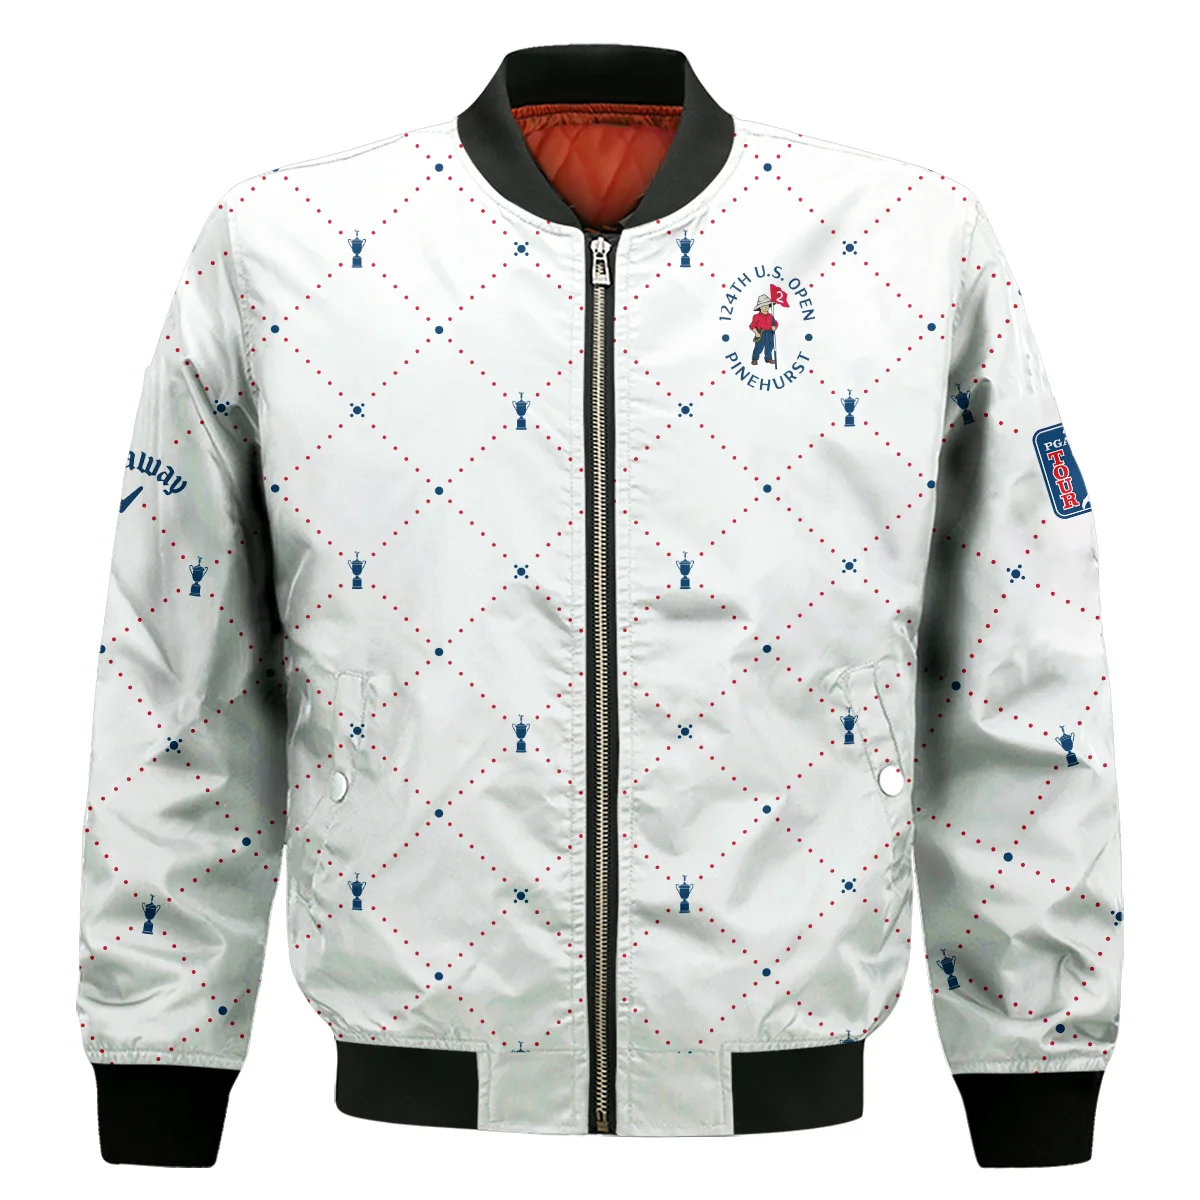 Argyle Pattern With Cup 124th U.S. Open Pinehurst Callaway Quarter-Zip Jacket Style Classic Quarter-Zip Jacket